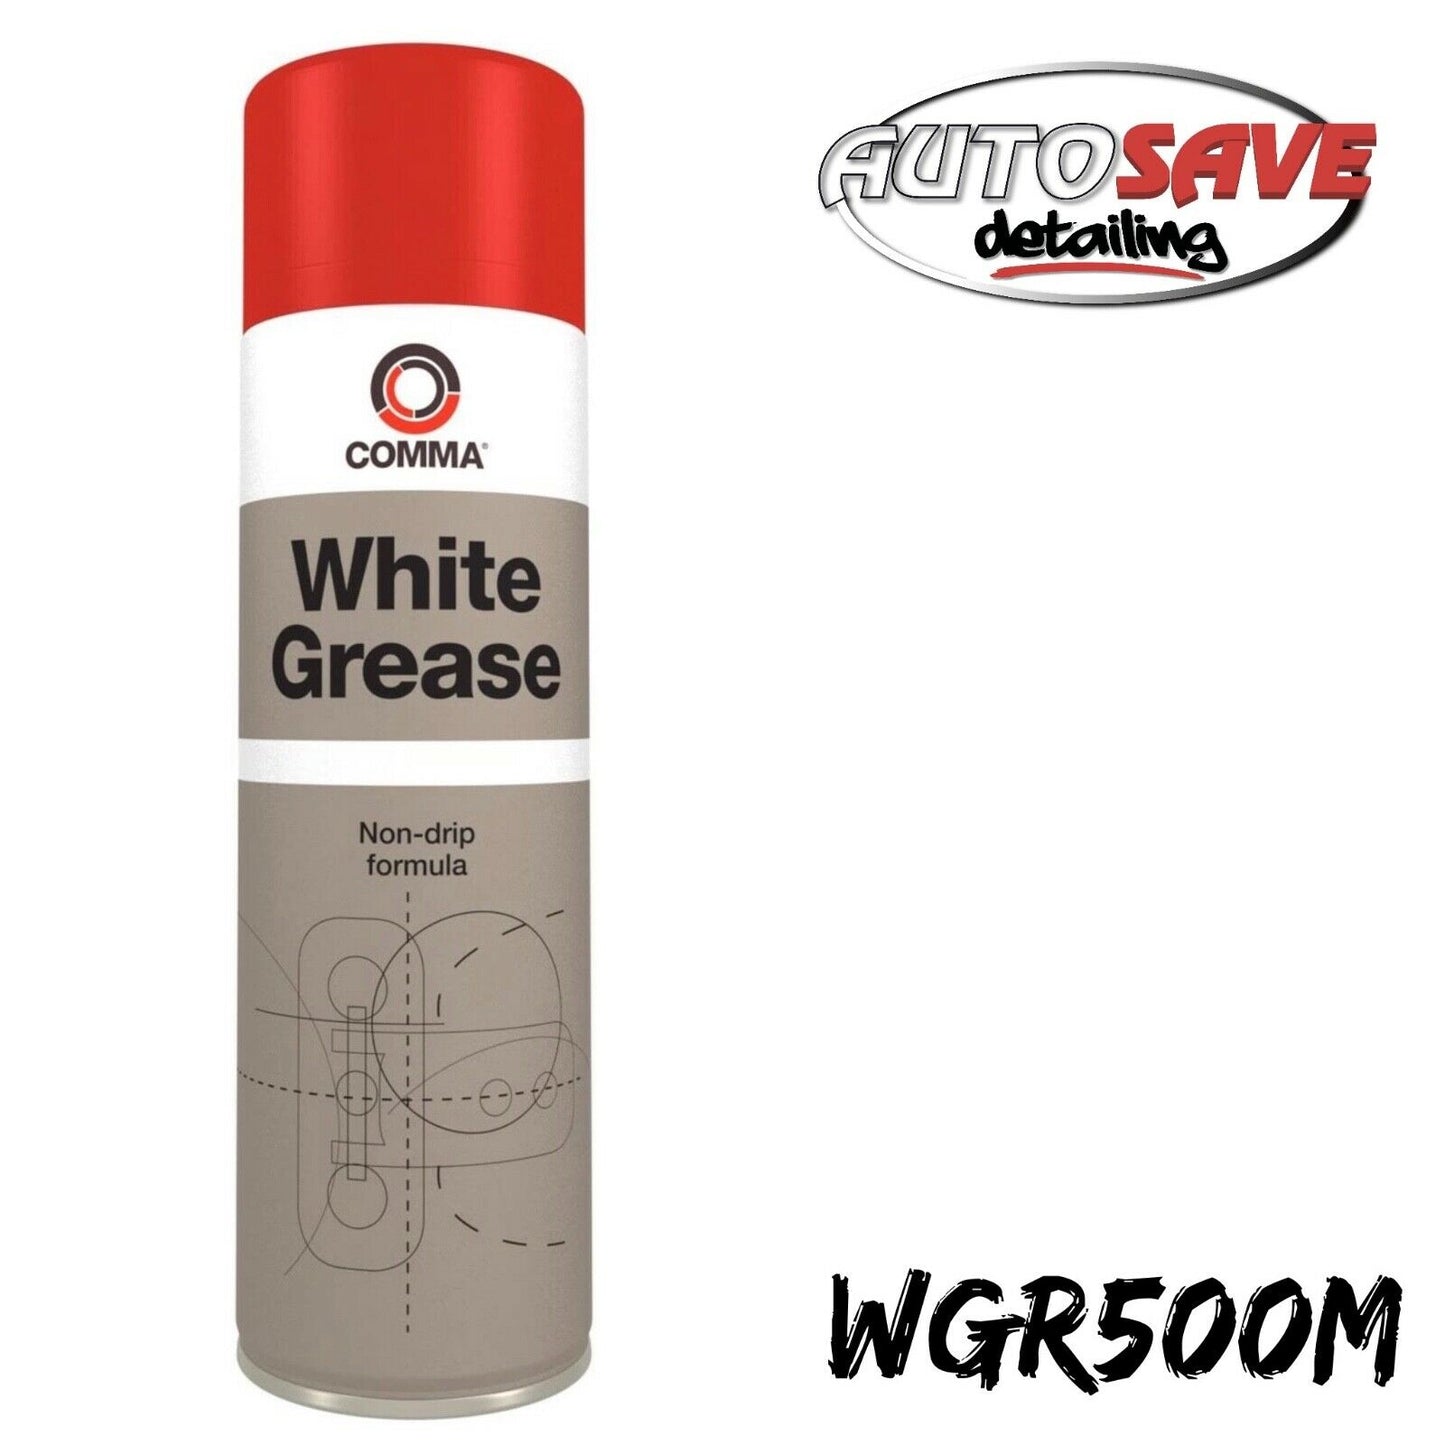 Comma WGR500M 500ml Grease - White